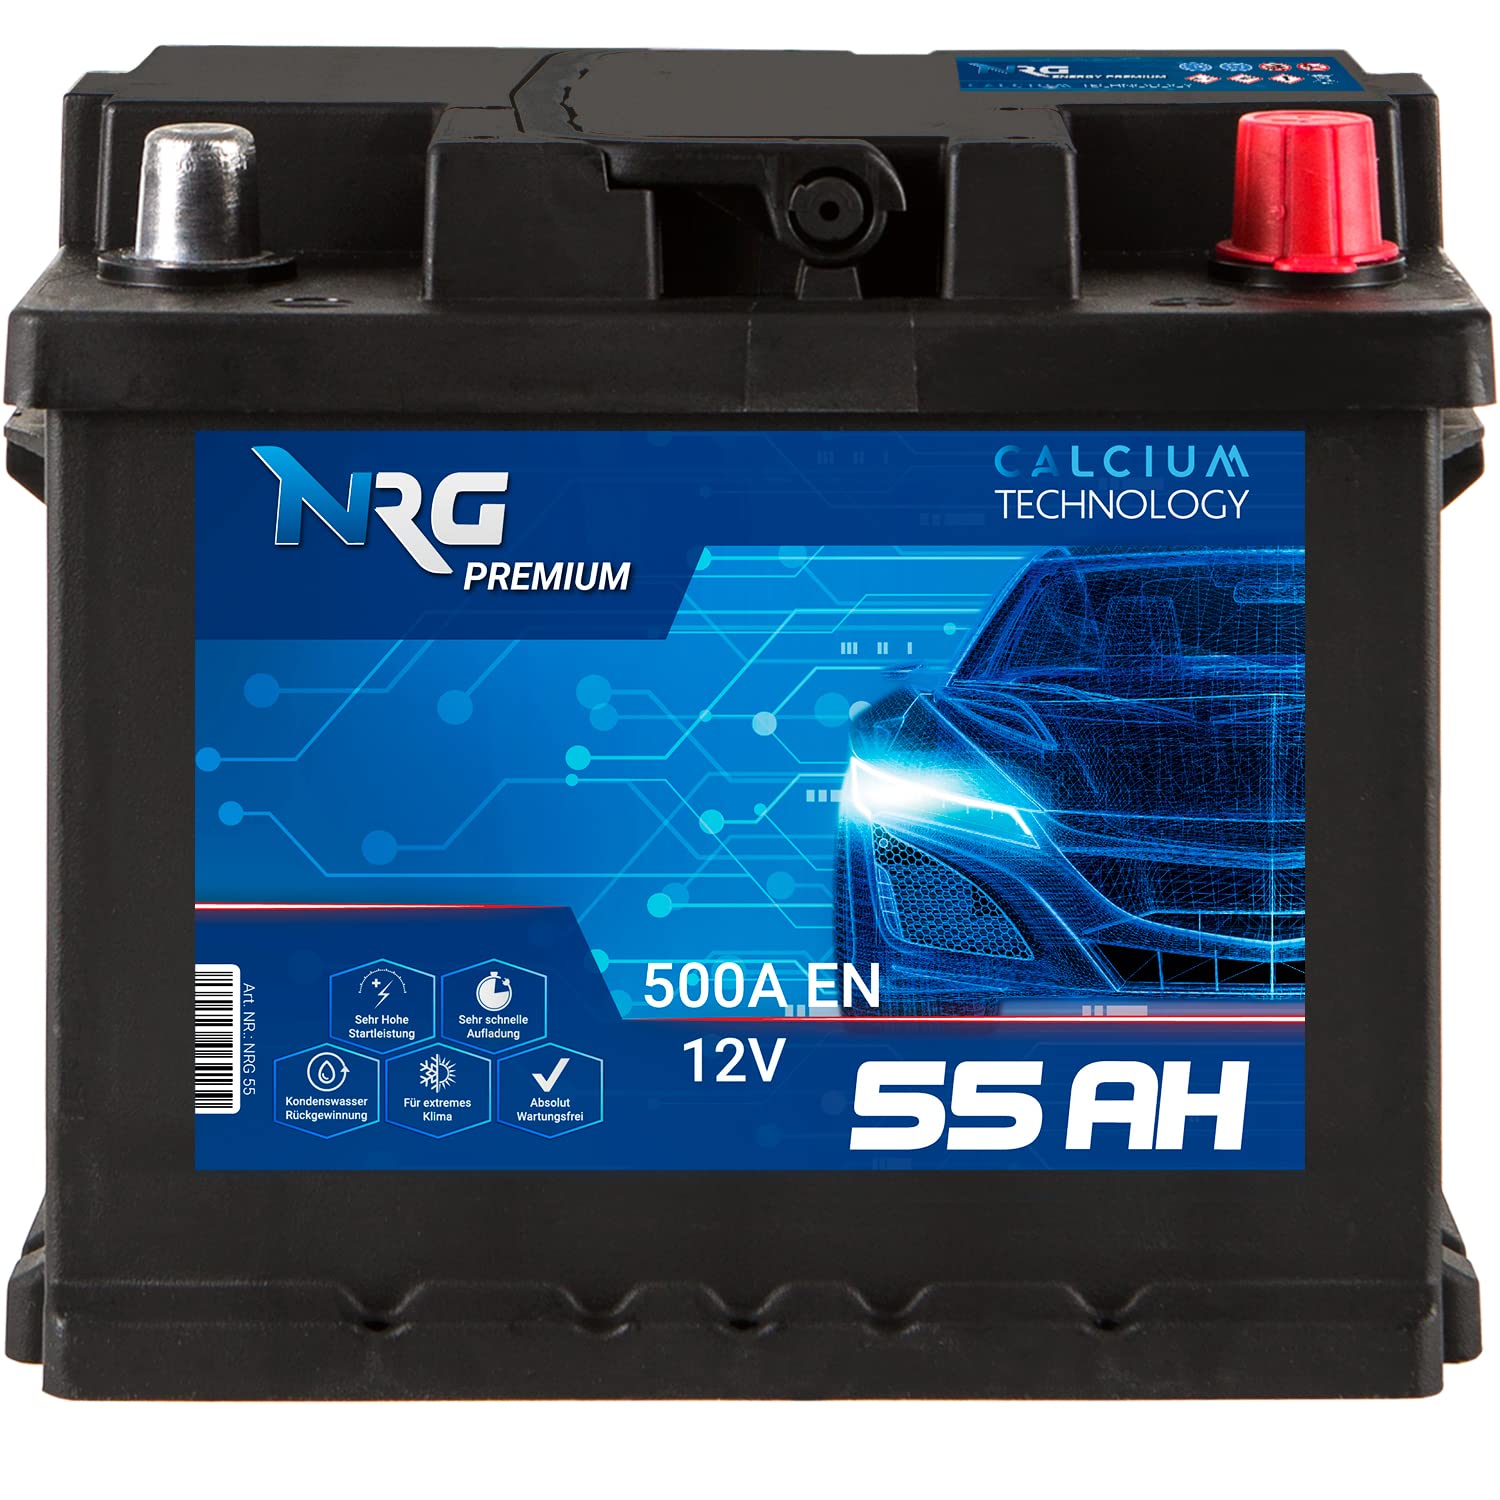 NRG Premium Autobatterie 12V 55Ah 500A/EN Batterie ersetzt 45Ah 47Ah 50Ah 52Ah 53Ah 54Ah von NRG PREMIUM